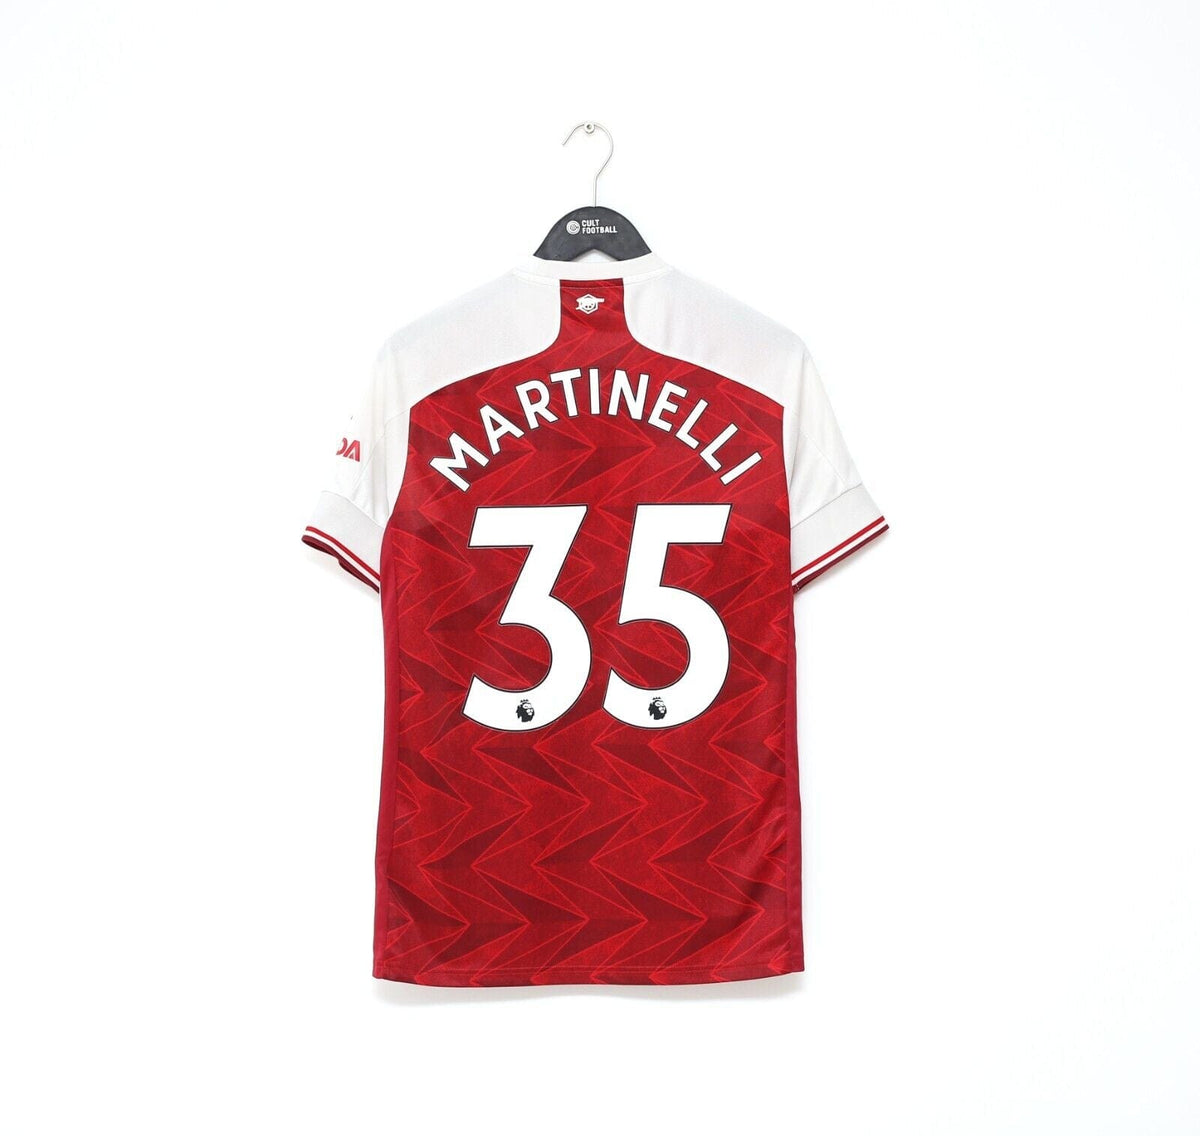 2020/21 MARTINELLI #35 Arsenal Vintage adidas Home Football Shirt (M)